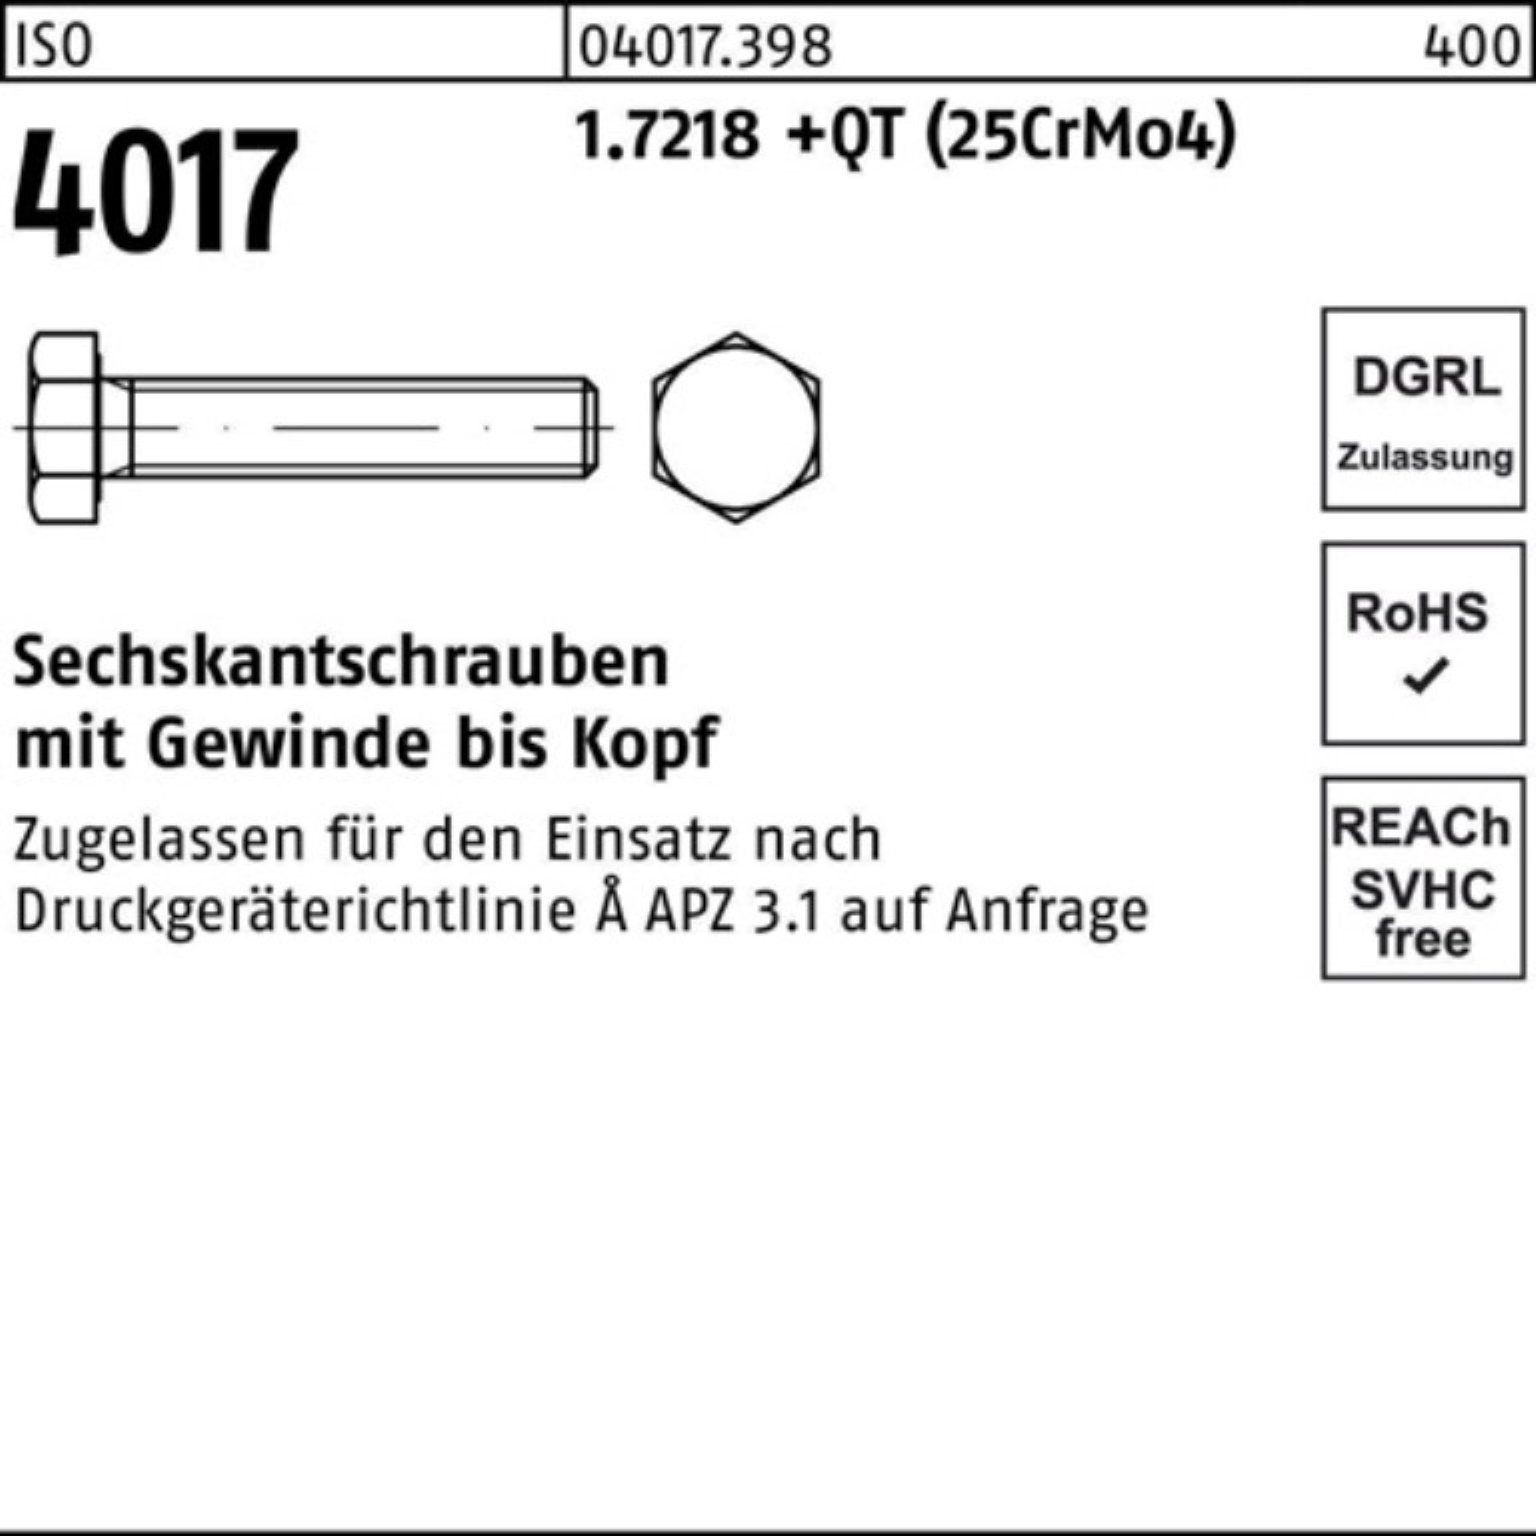 35 100er Pack Sechskantschraube Bufab Sechskantschraube 4017 1.7218 VG ISO +QT M20x (25CrMo4)